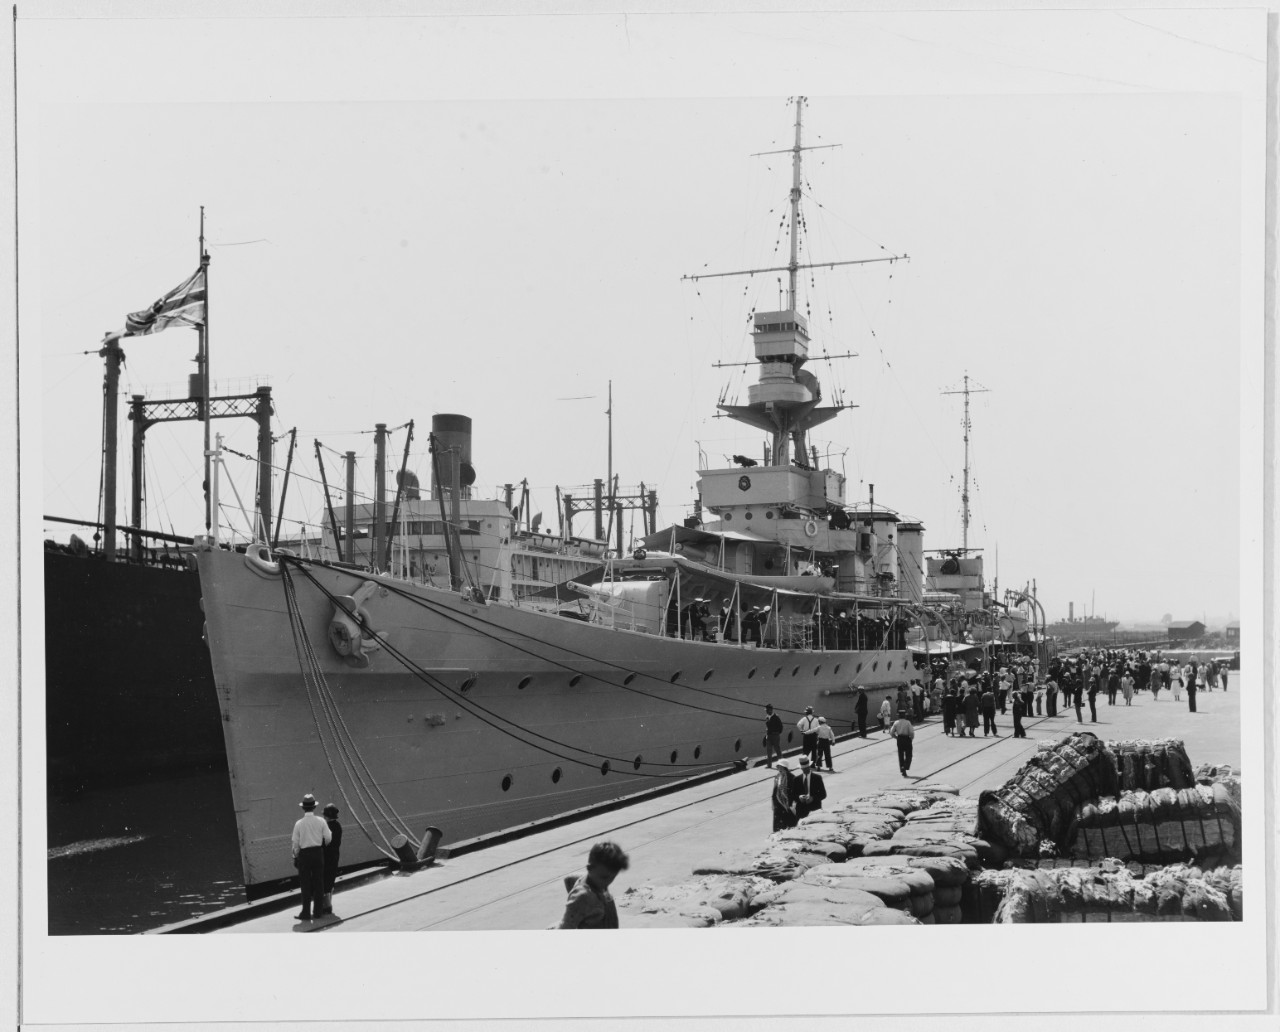 HMS DELHI (British Cruiser, 1919)